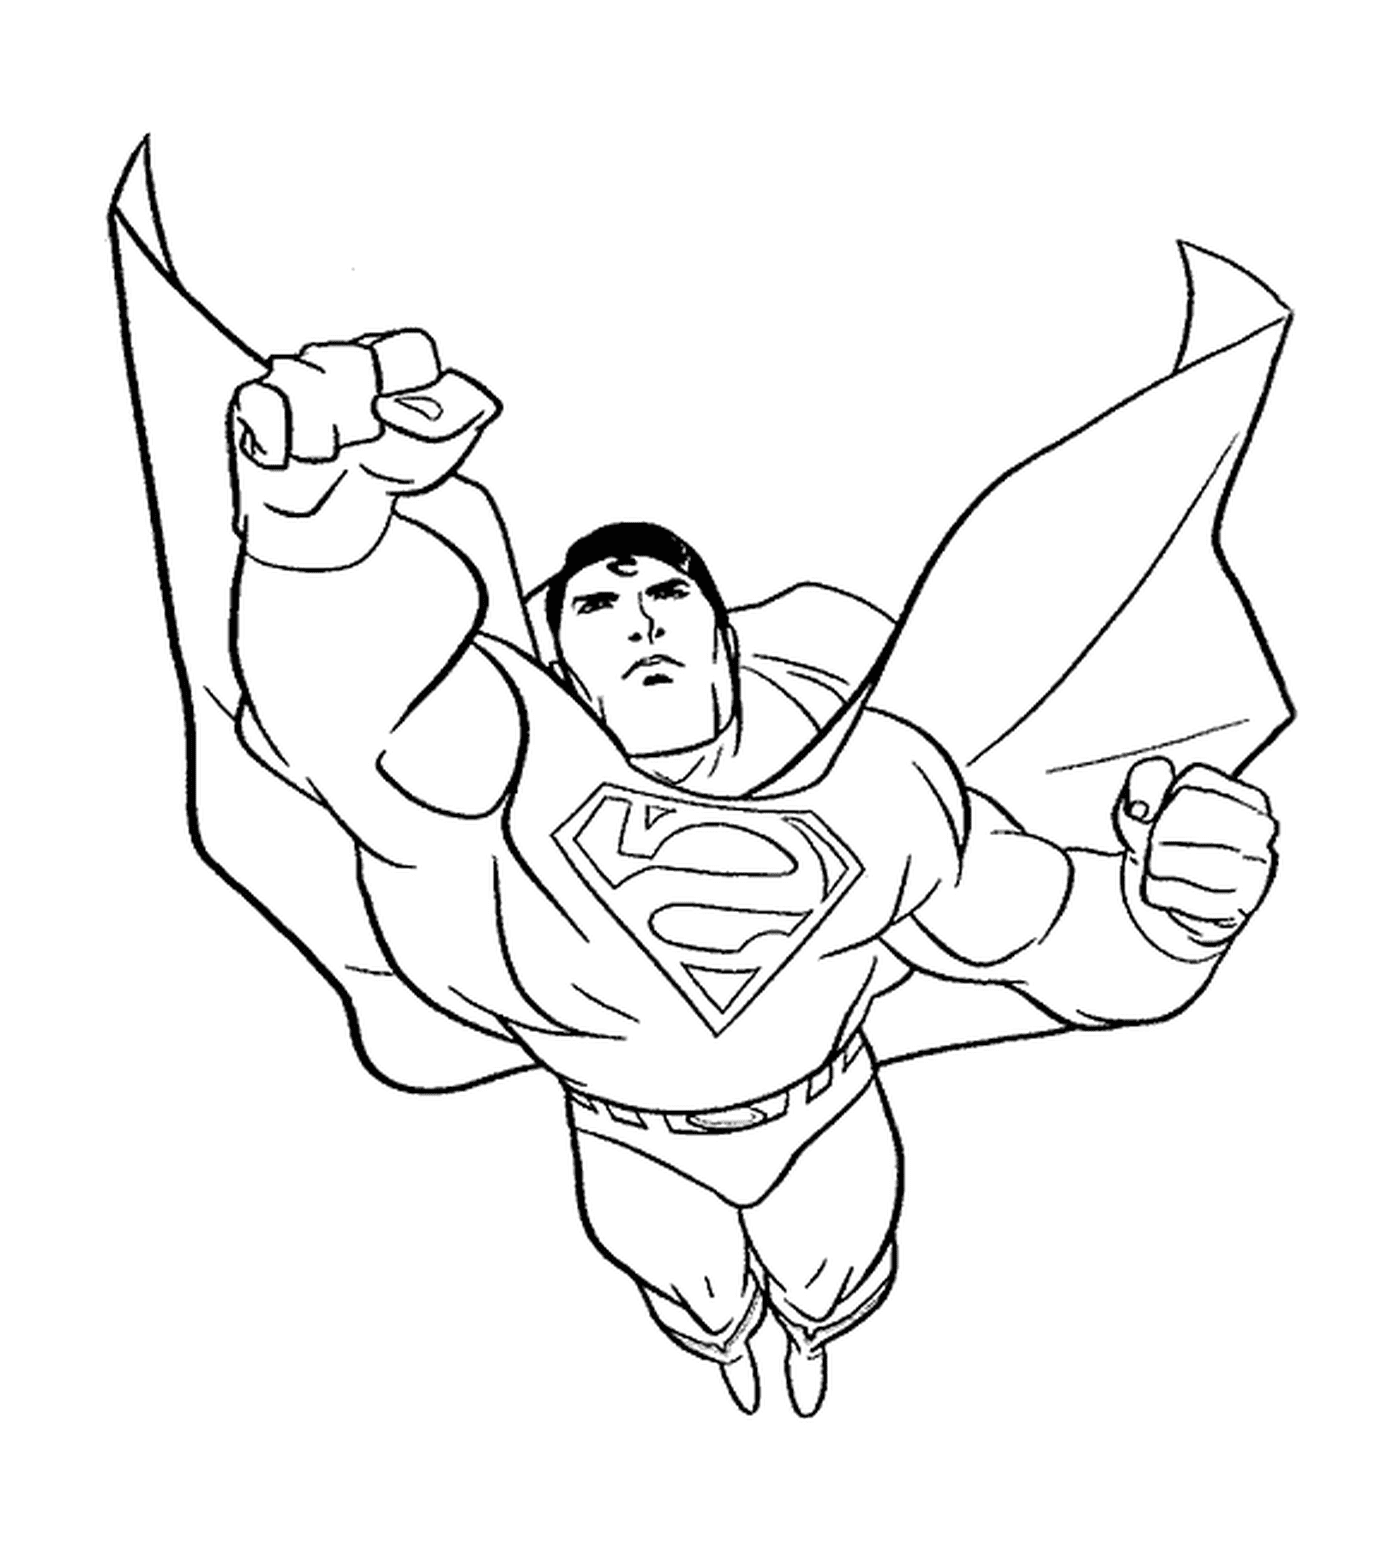  Superman, fist forward 